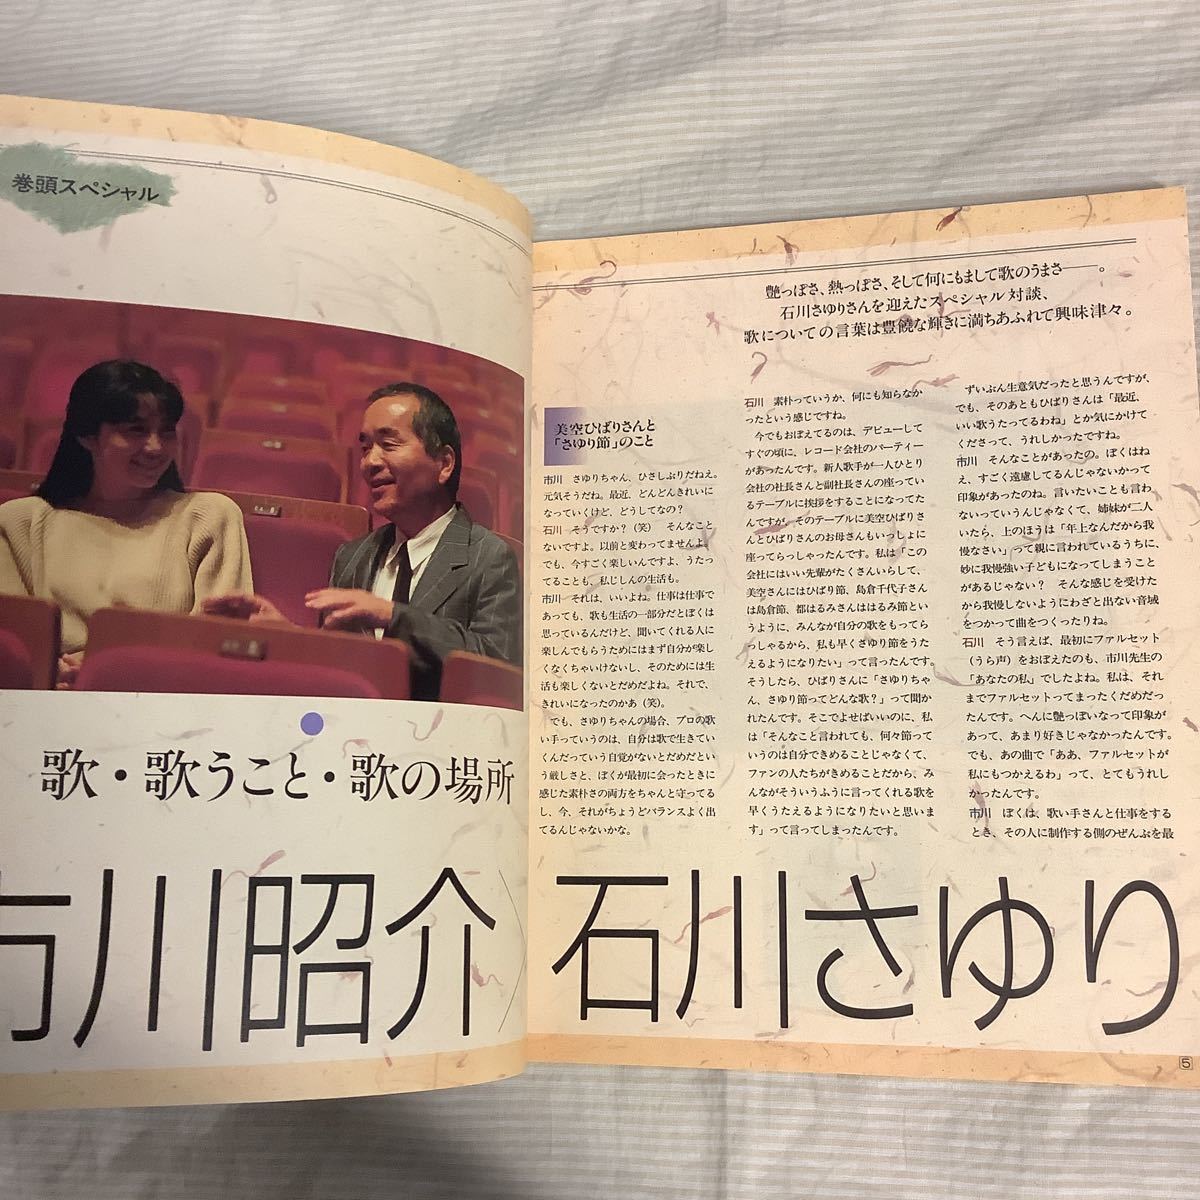 NHK hobby various subjects karaoke enka .. law Ichikawa .. Ishikawa ...1990 year 10 month 